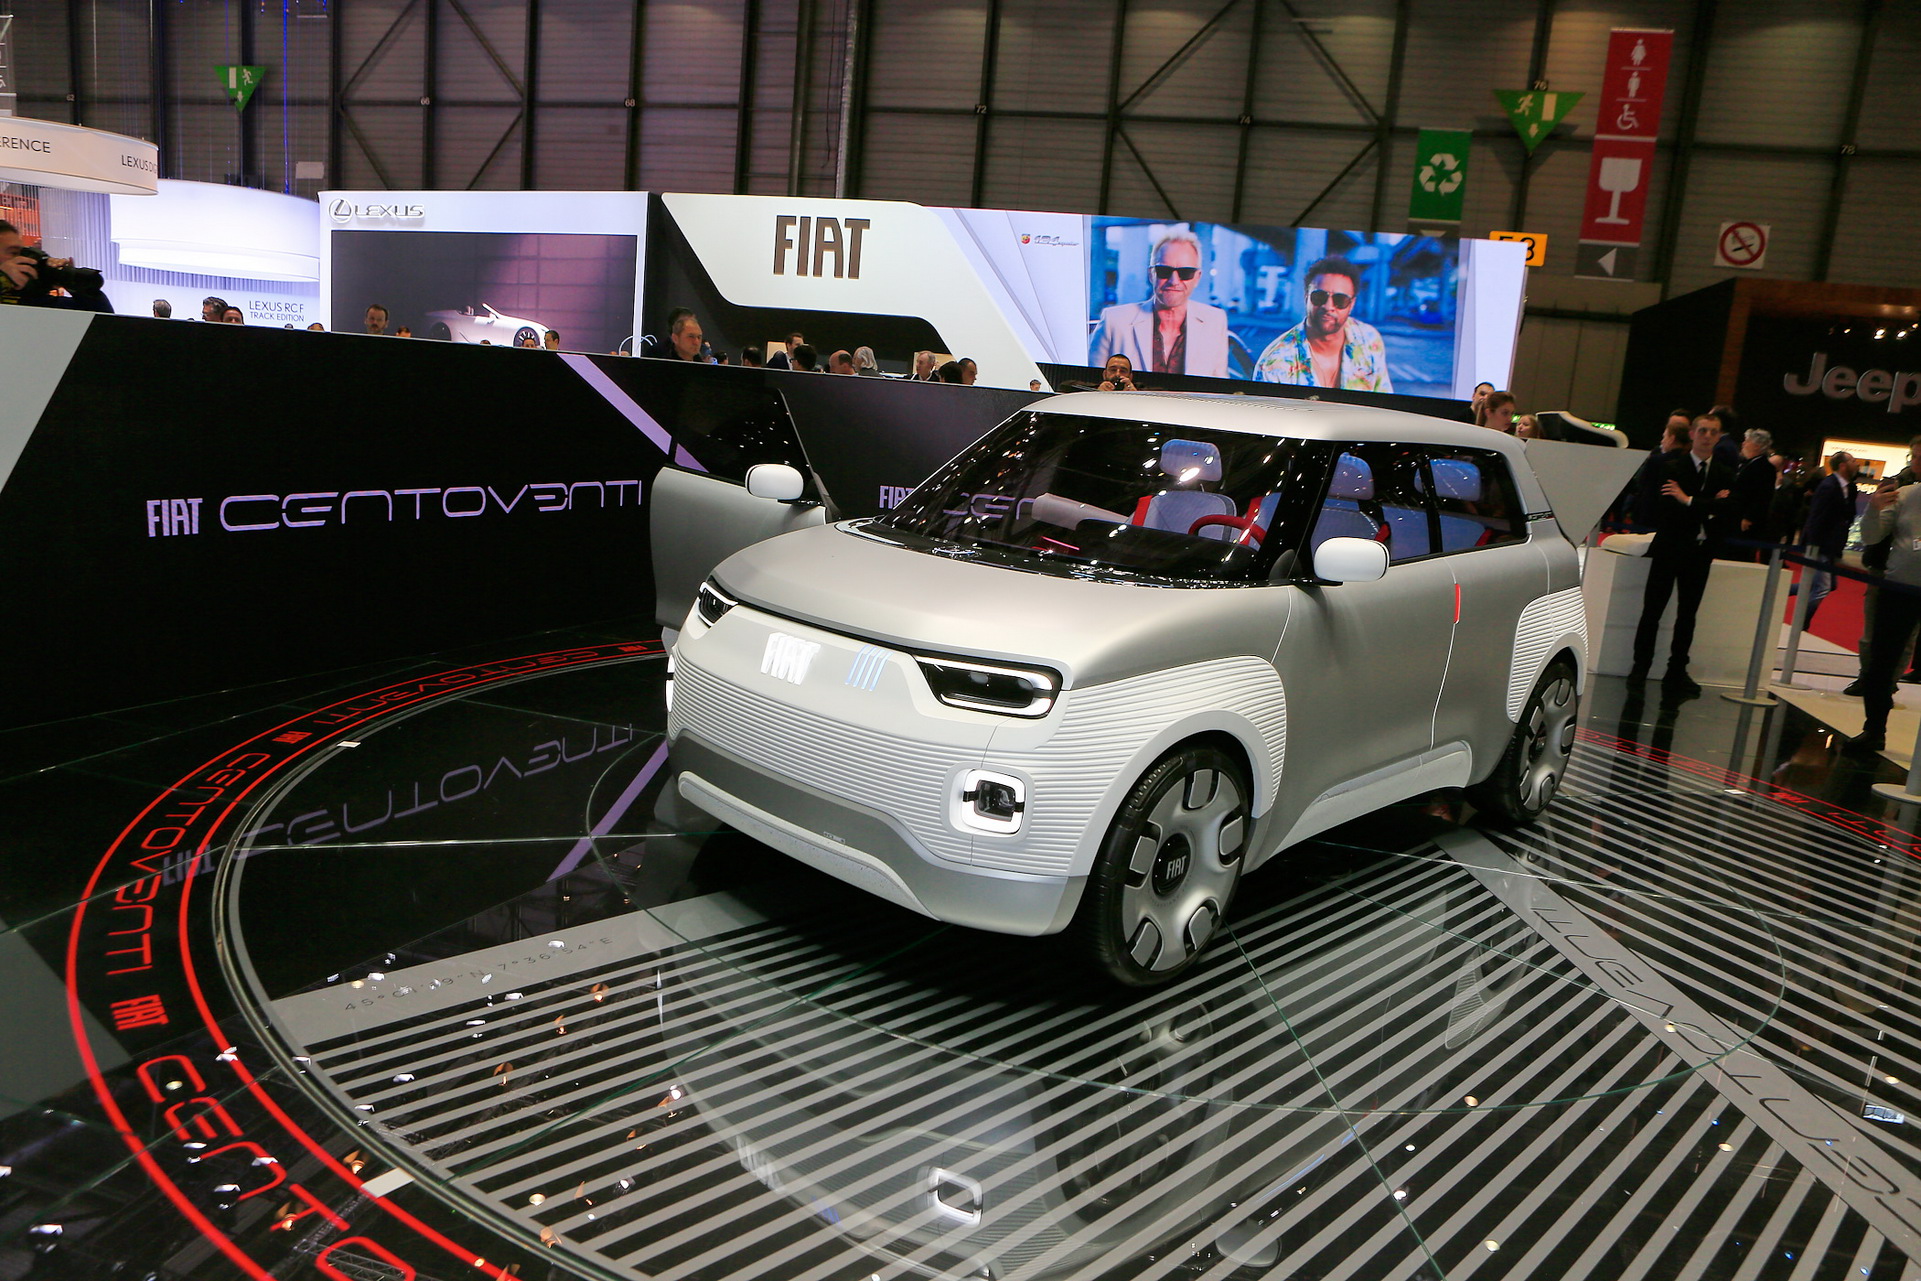 Yeni Fiat Panda böyle olacak: İşte elektrikli Fiat Centoventi konsepti